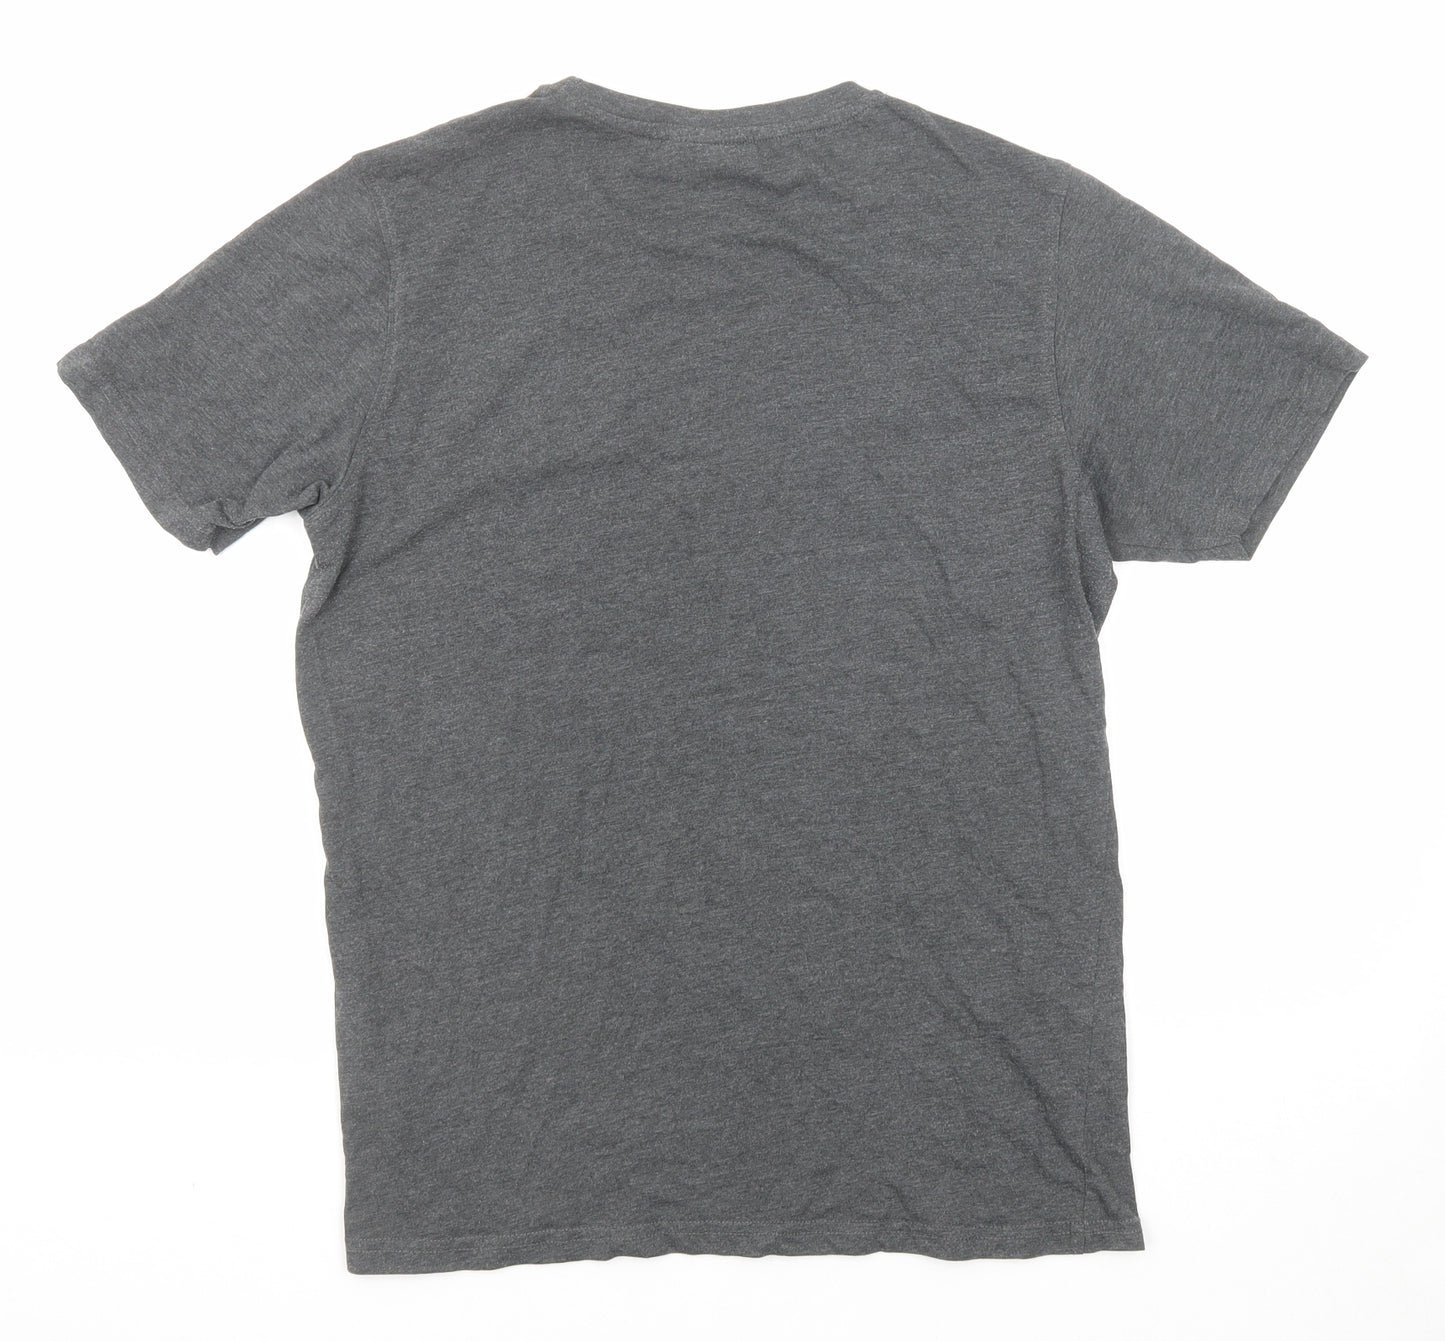 Smith & Jones Mens Grey Cotton T-Shirt Size S Round Neck